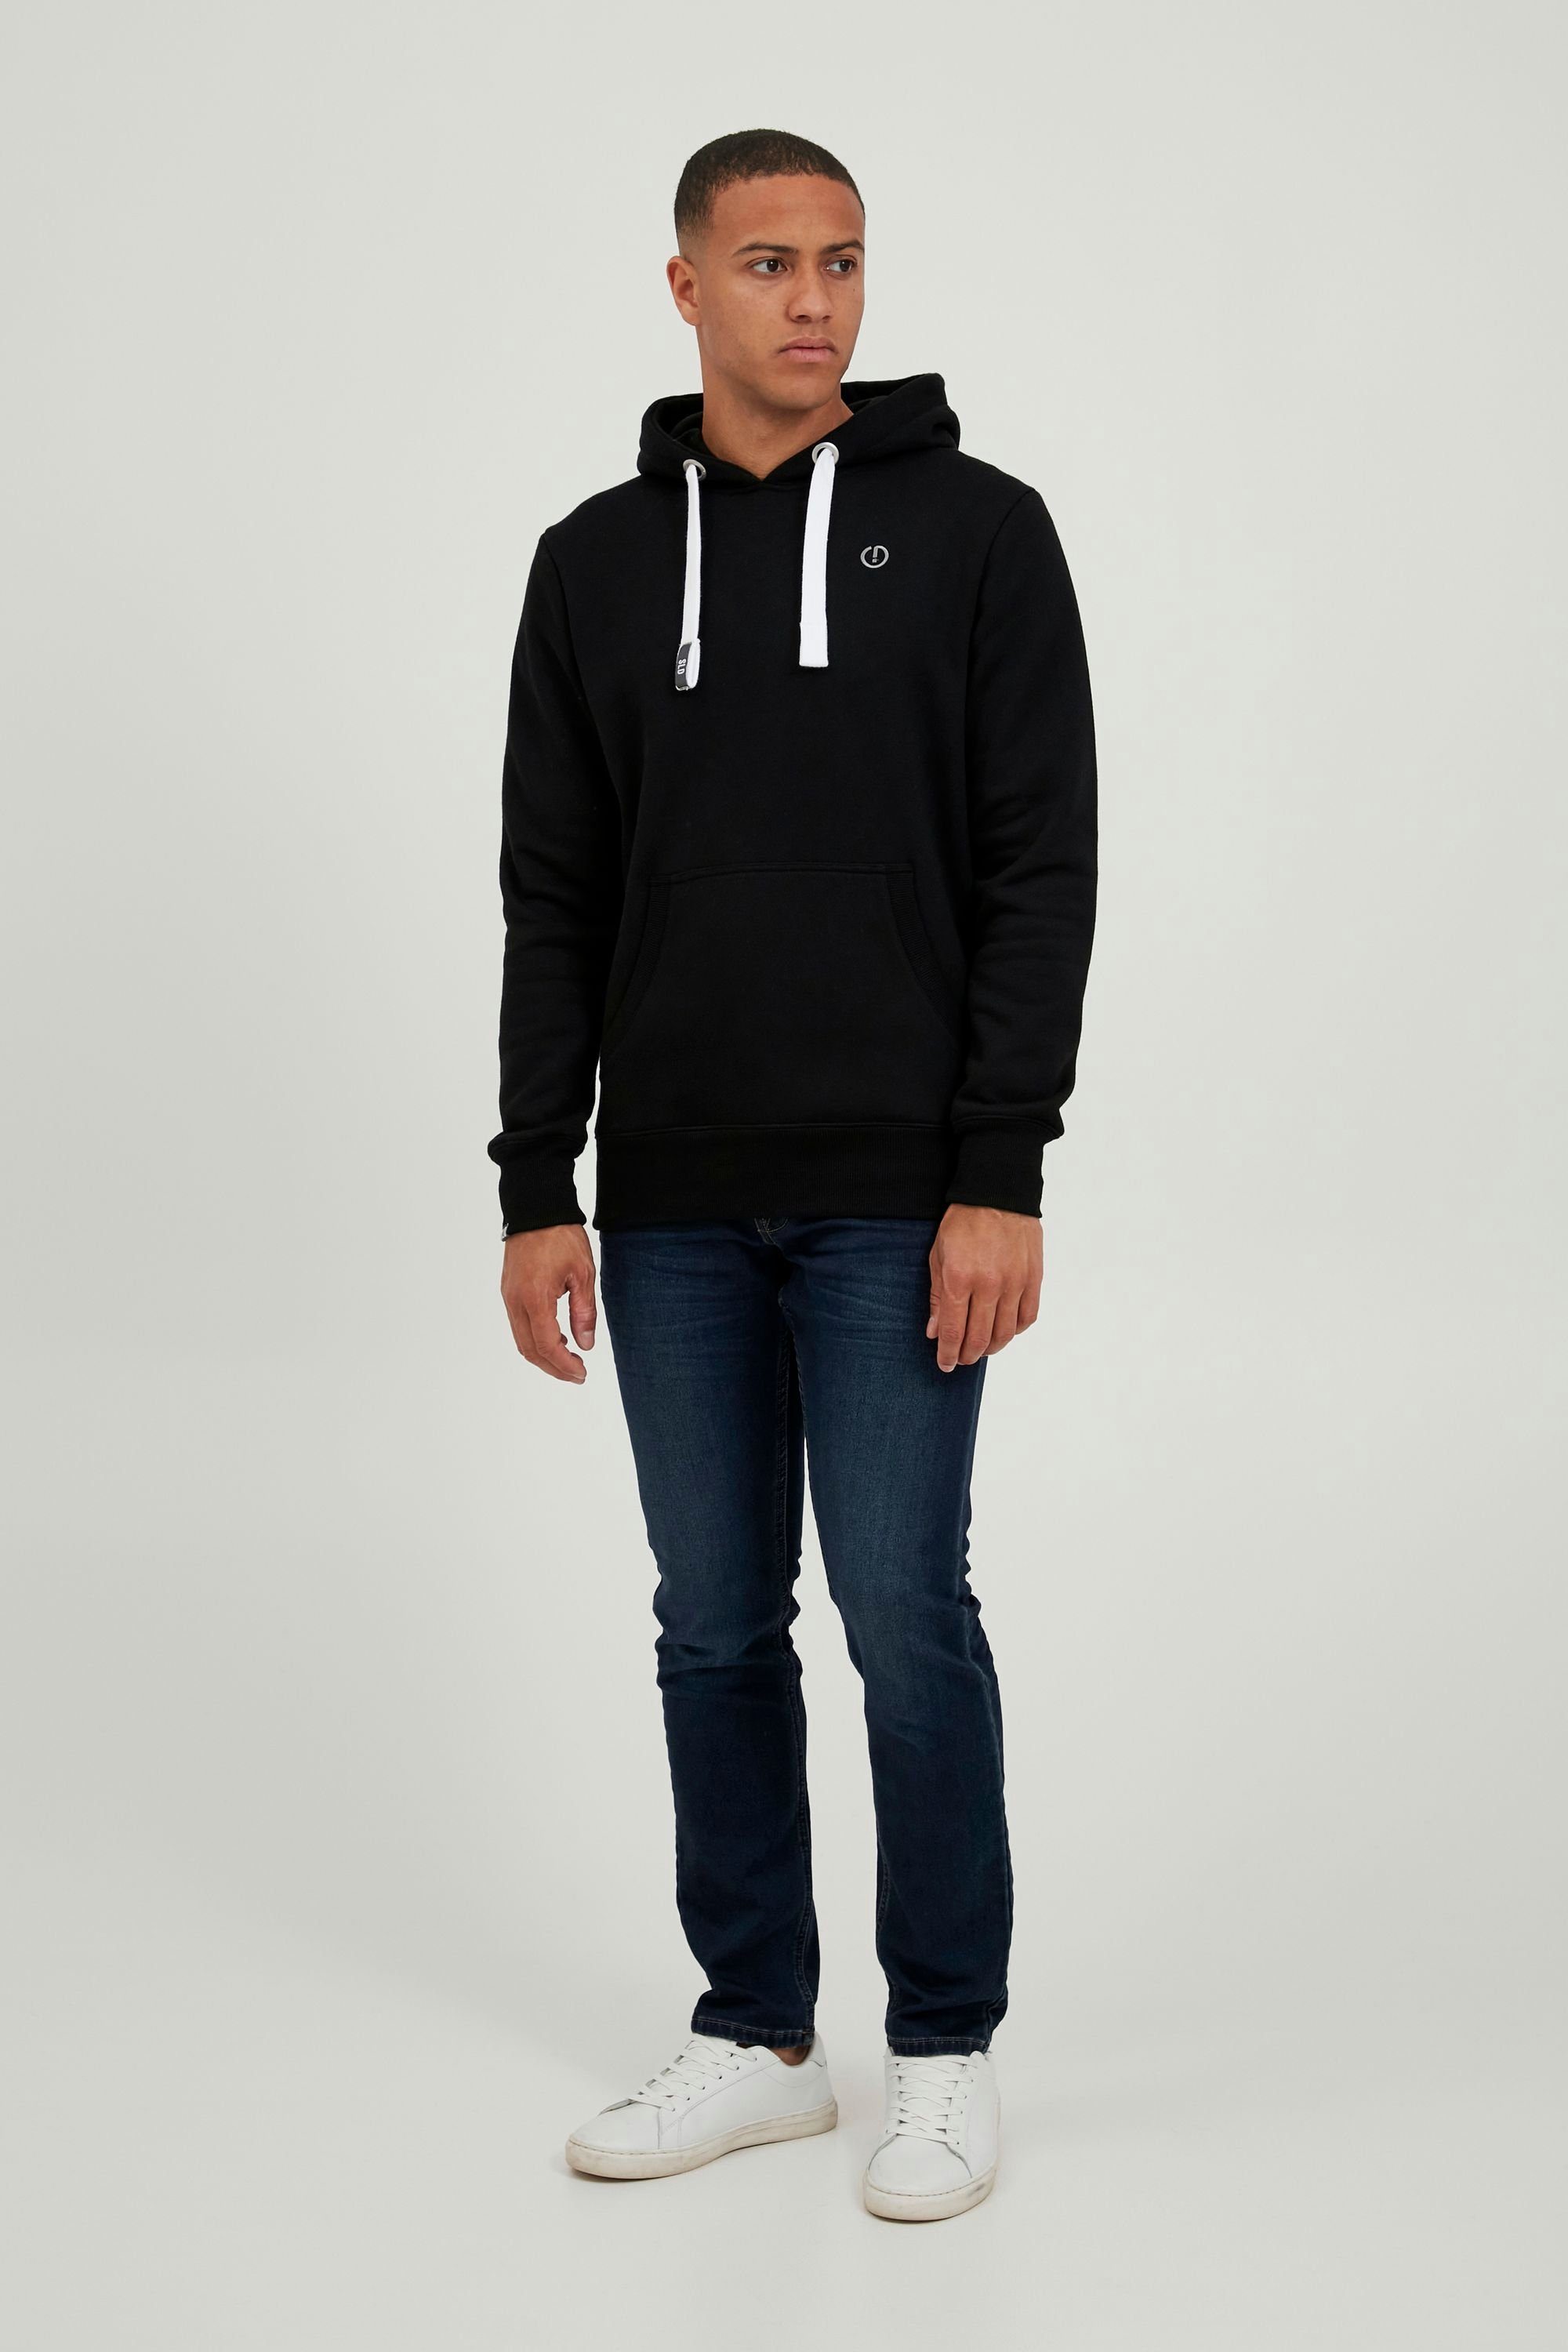 Solid Hoodie SDBennHood Black kontrastfarbenenen mit Kapuzensweatshirt (9000) Details